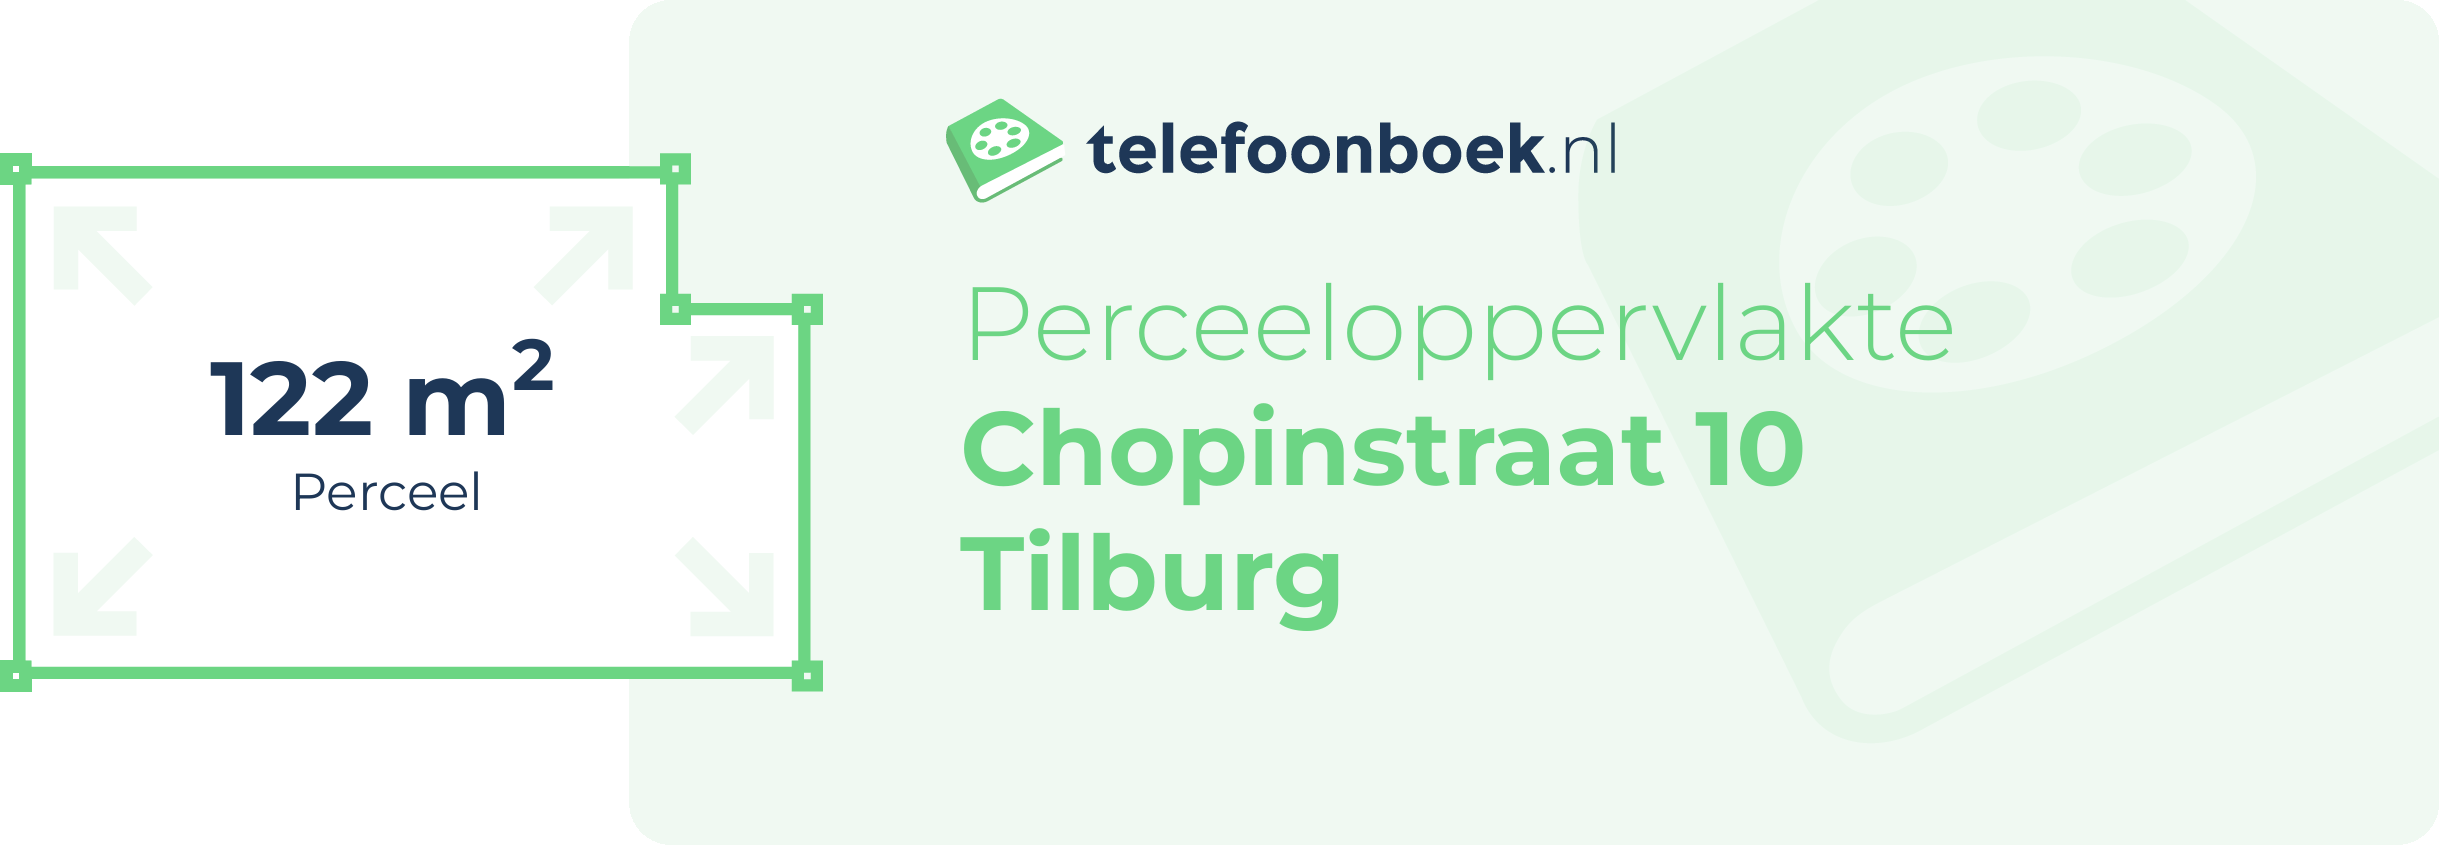 Perceeloppervlakte Chopinstraat 10 Tilburg